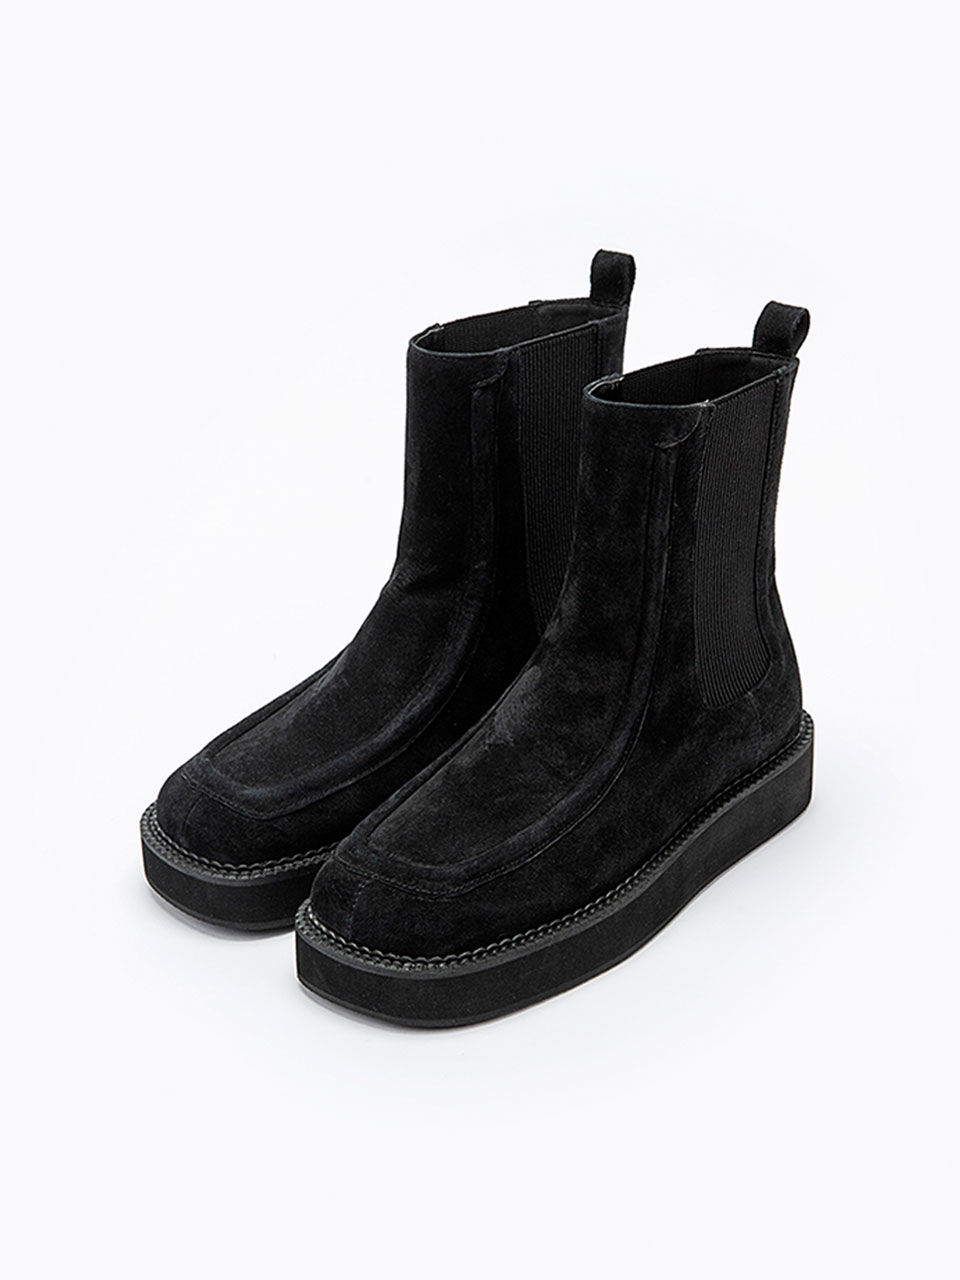 Chelsea Lane Boots (Suede Black)